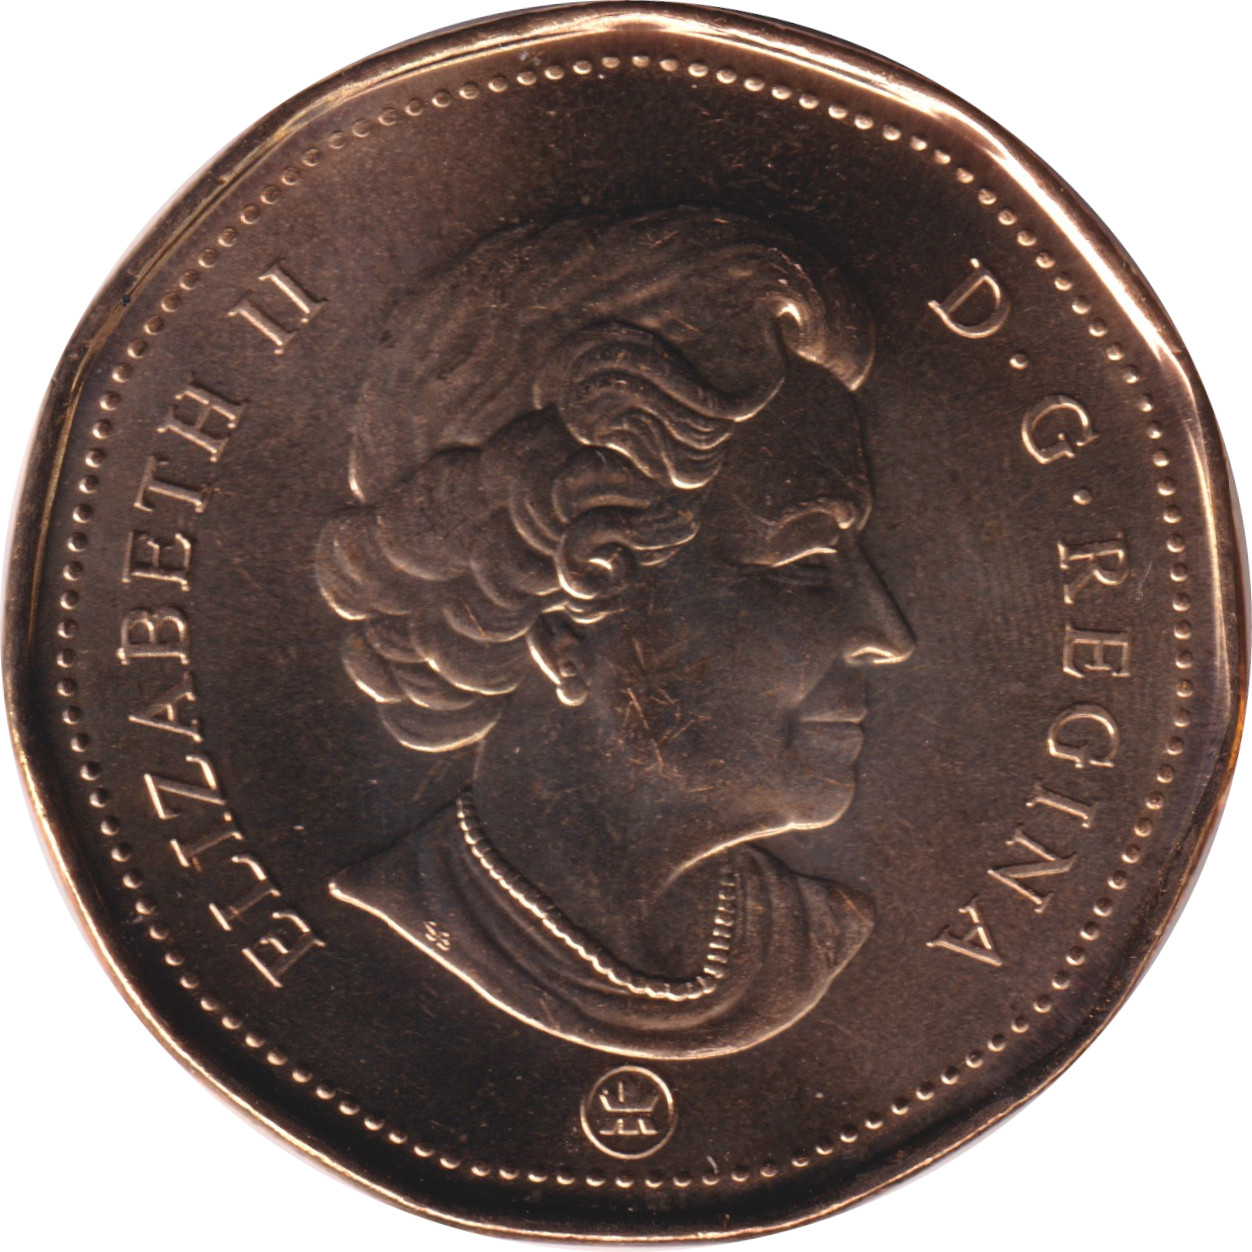 1 dollar - Huard olympique 2008